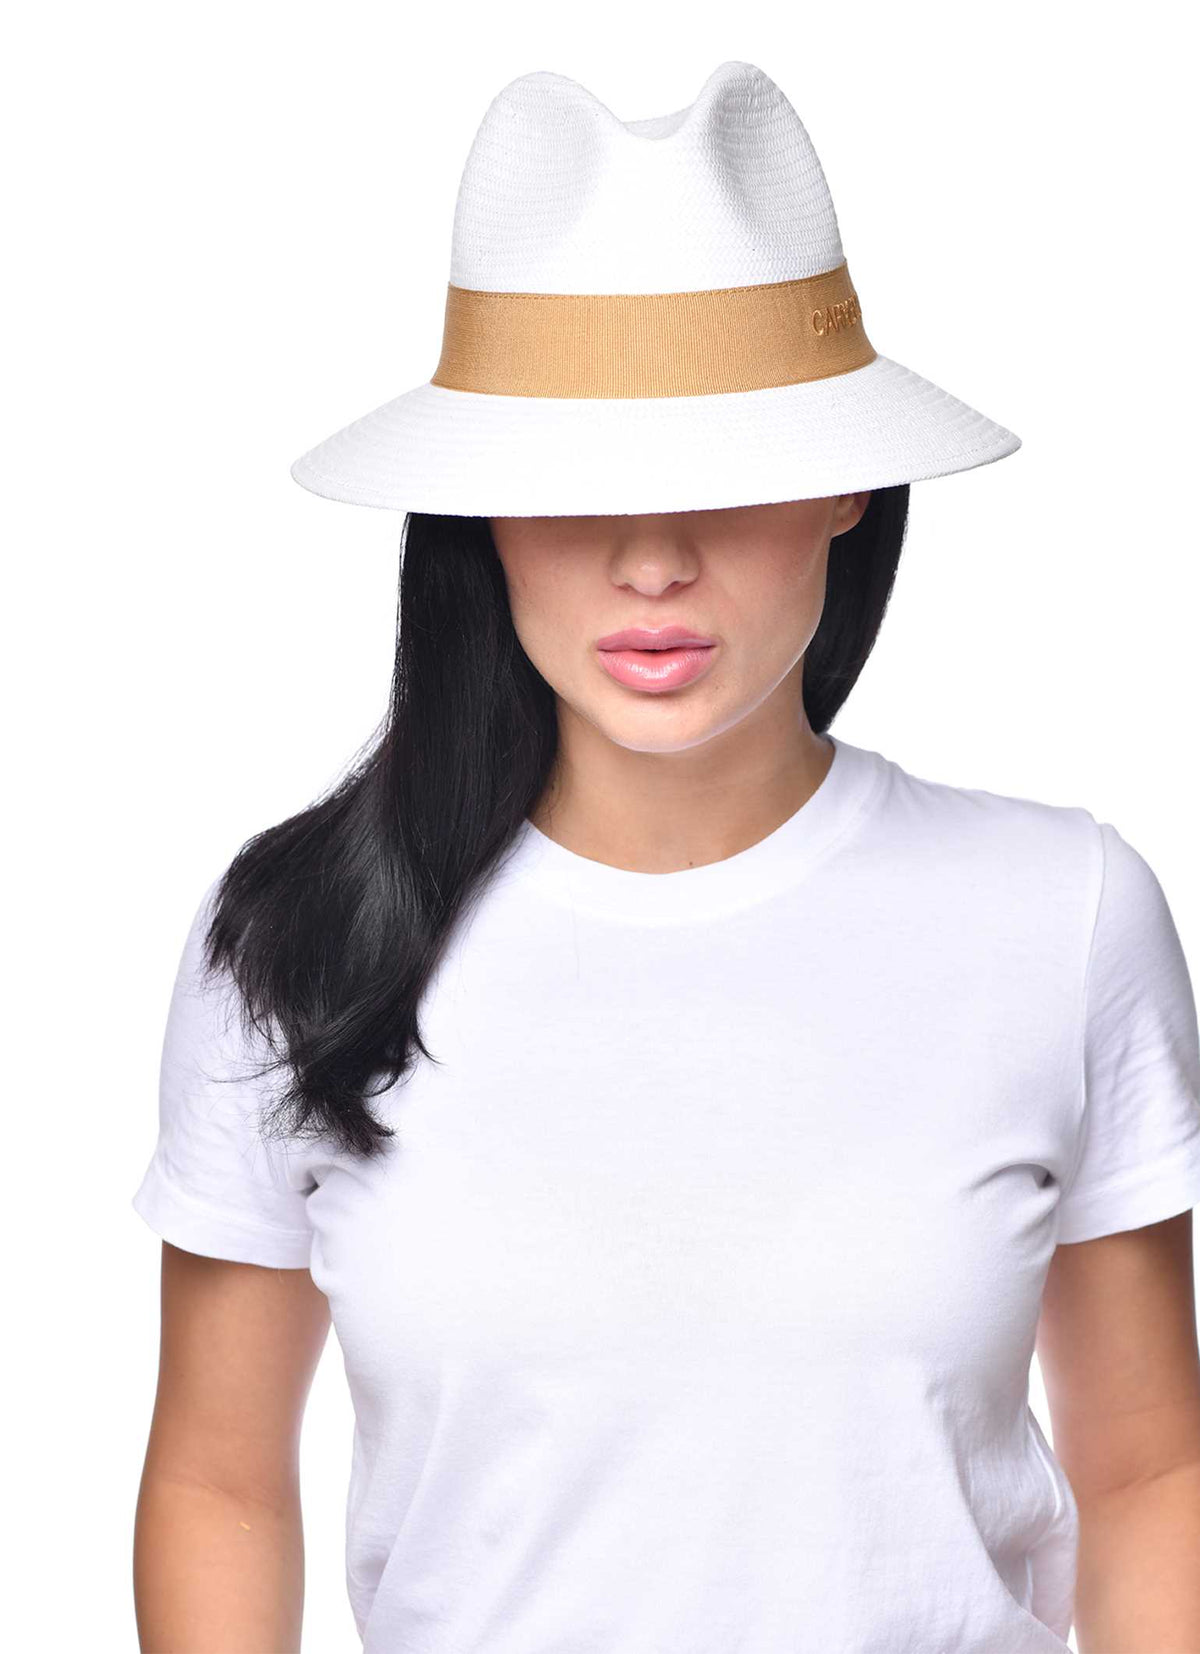 Women wearing water resistant Dolores 2 packable fedora hat in color nude